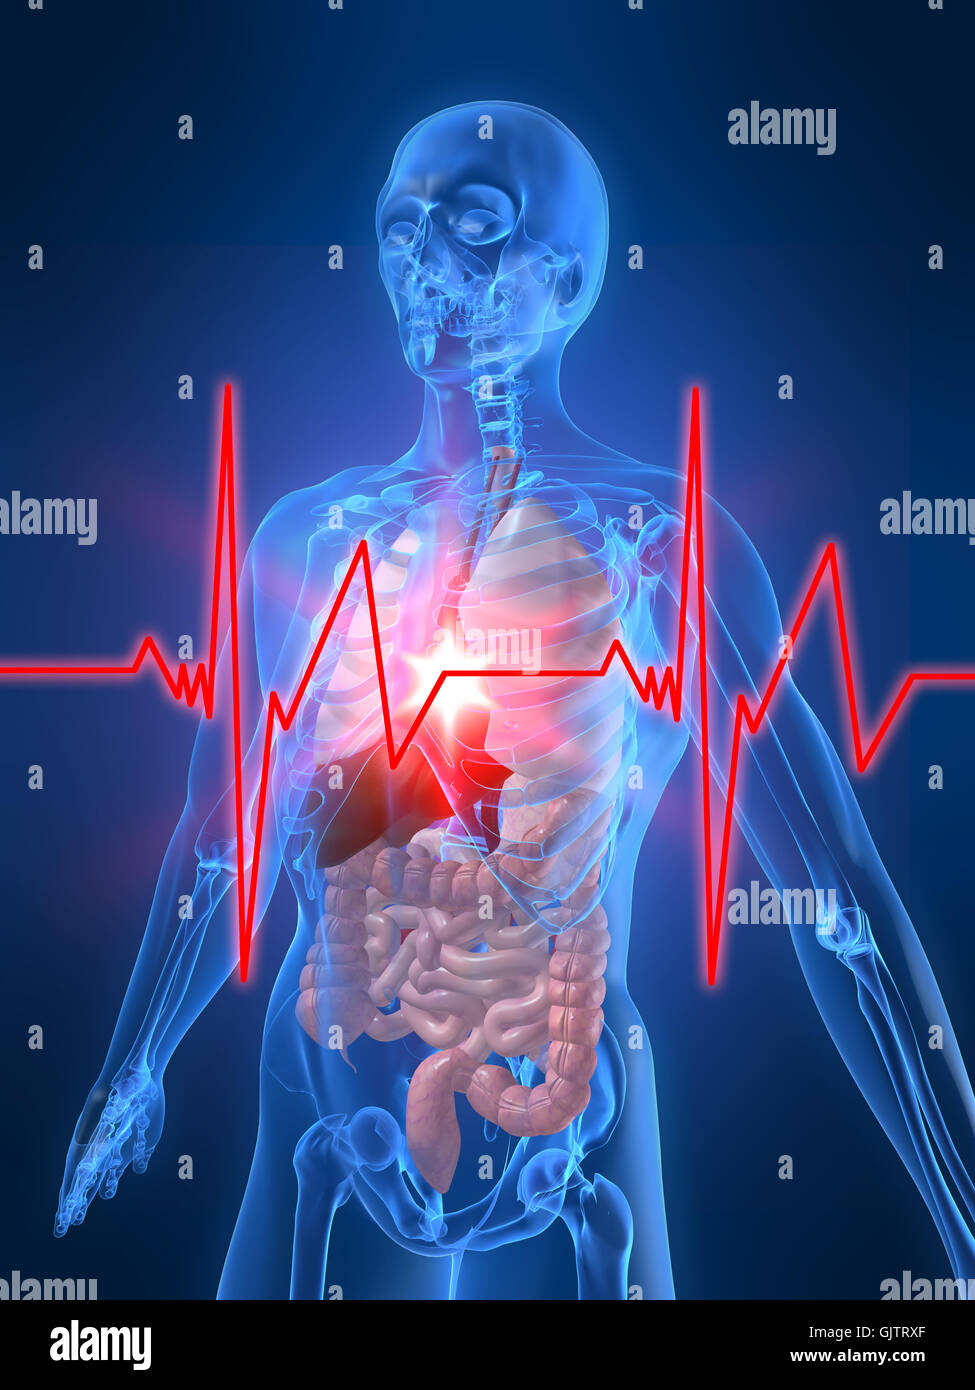 heartbeat artery disease Stock Photo